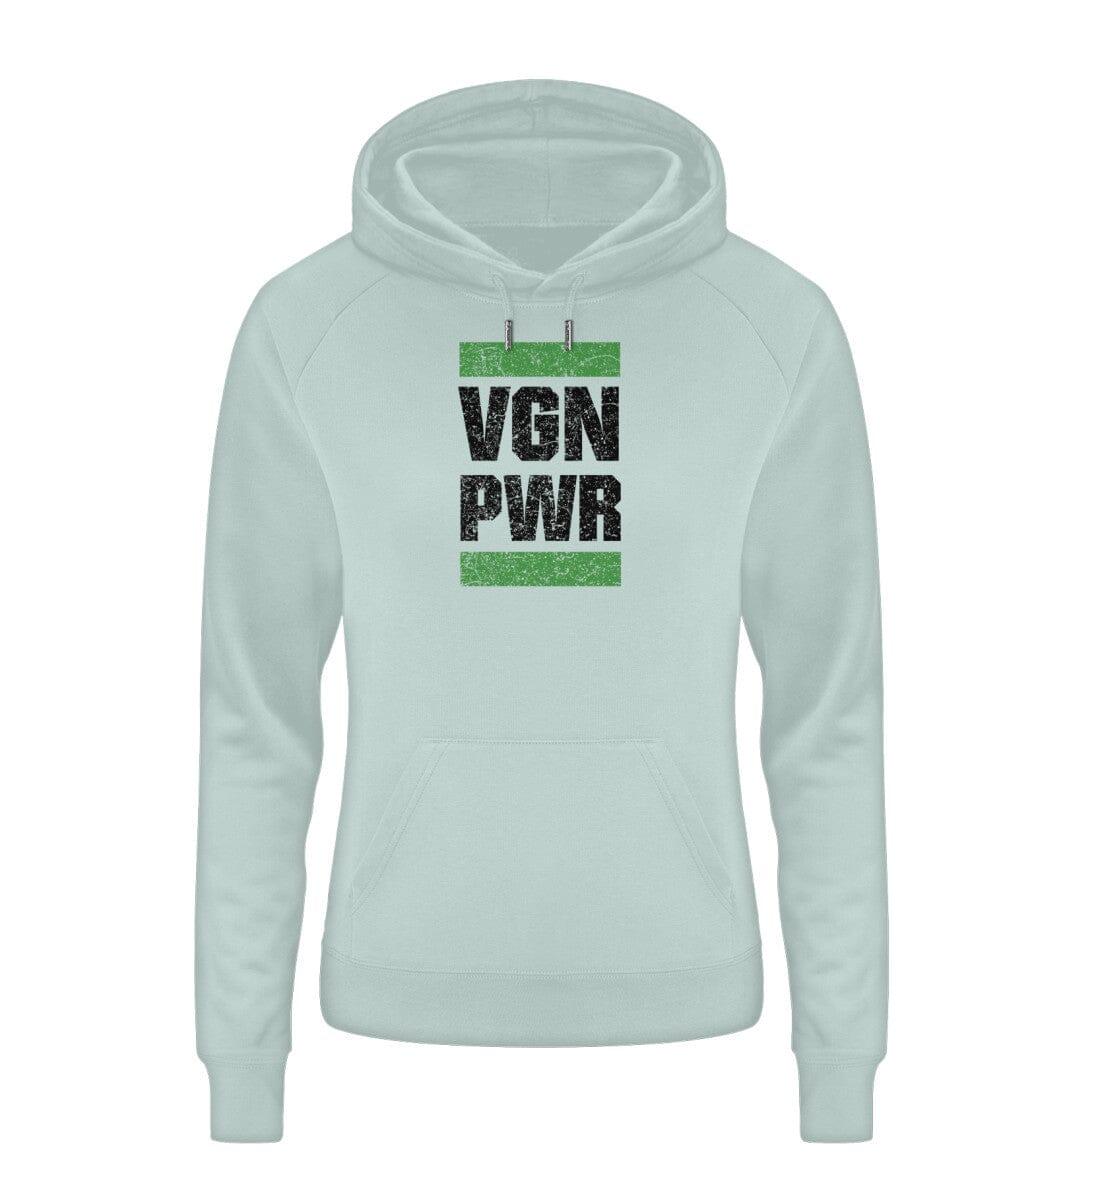 VGN PWR - Damen Premium Hoodie - S - Team Vegan © vegan t shirt